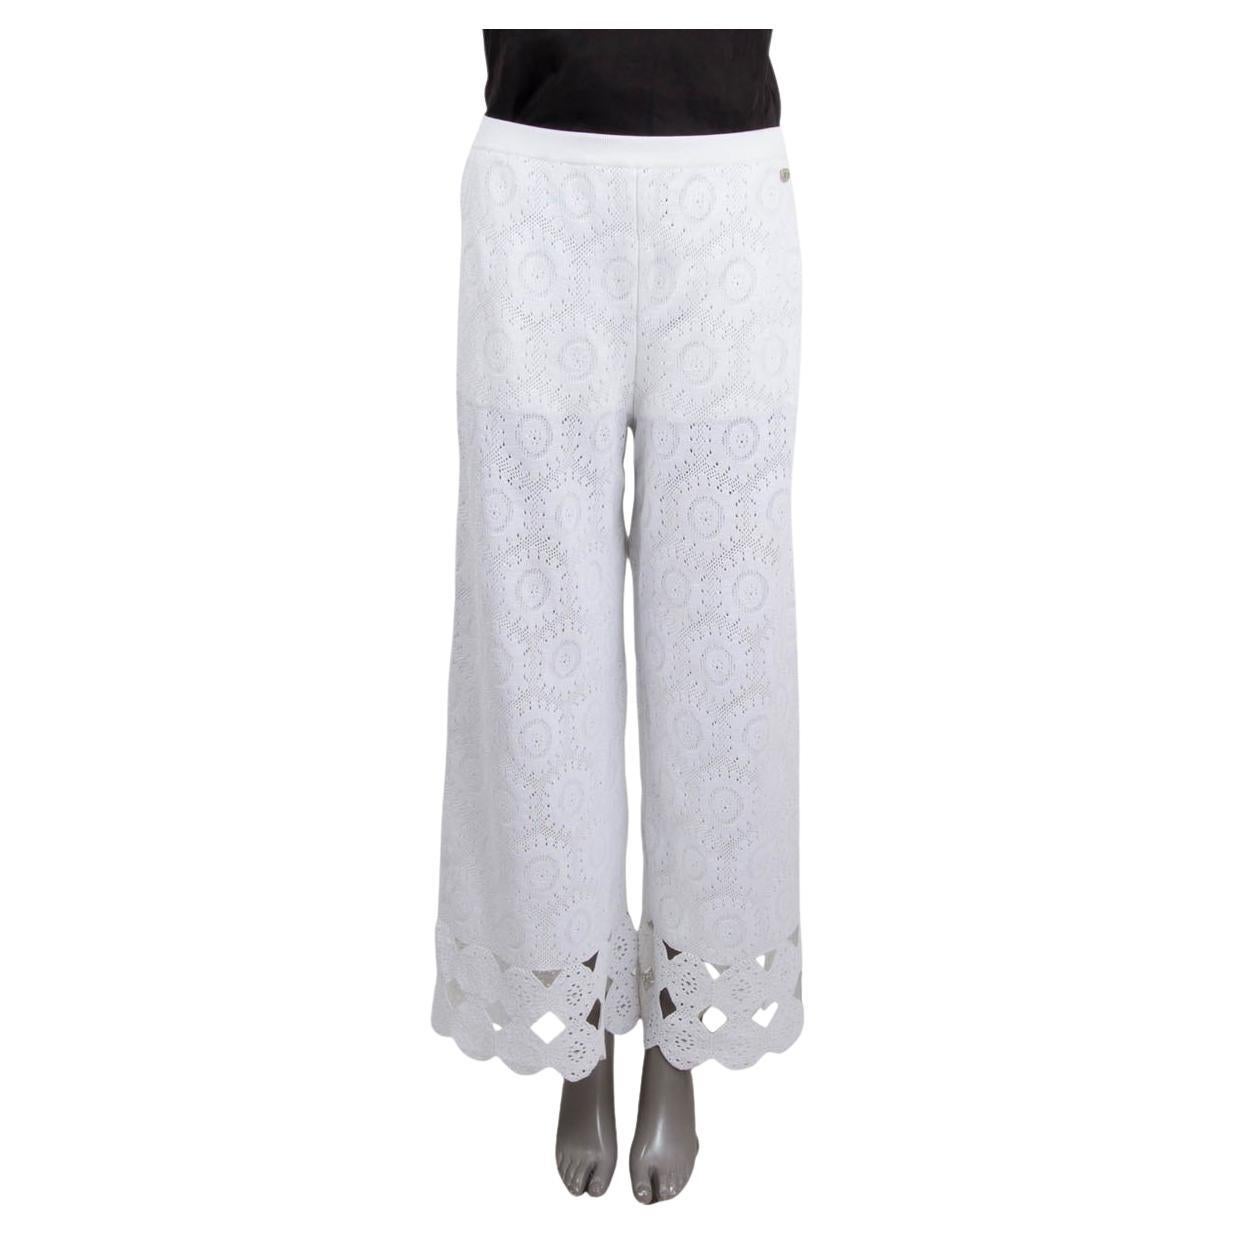 Chanel White Cotton 2020 20P Crochet Knit Pants 38 S